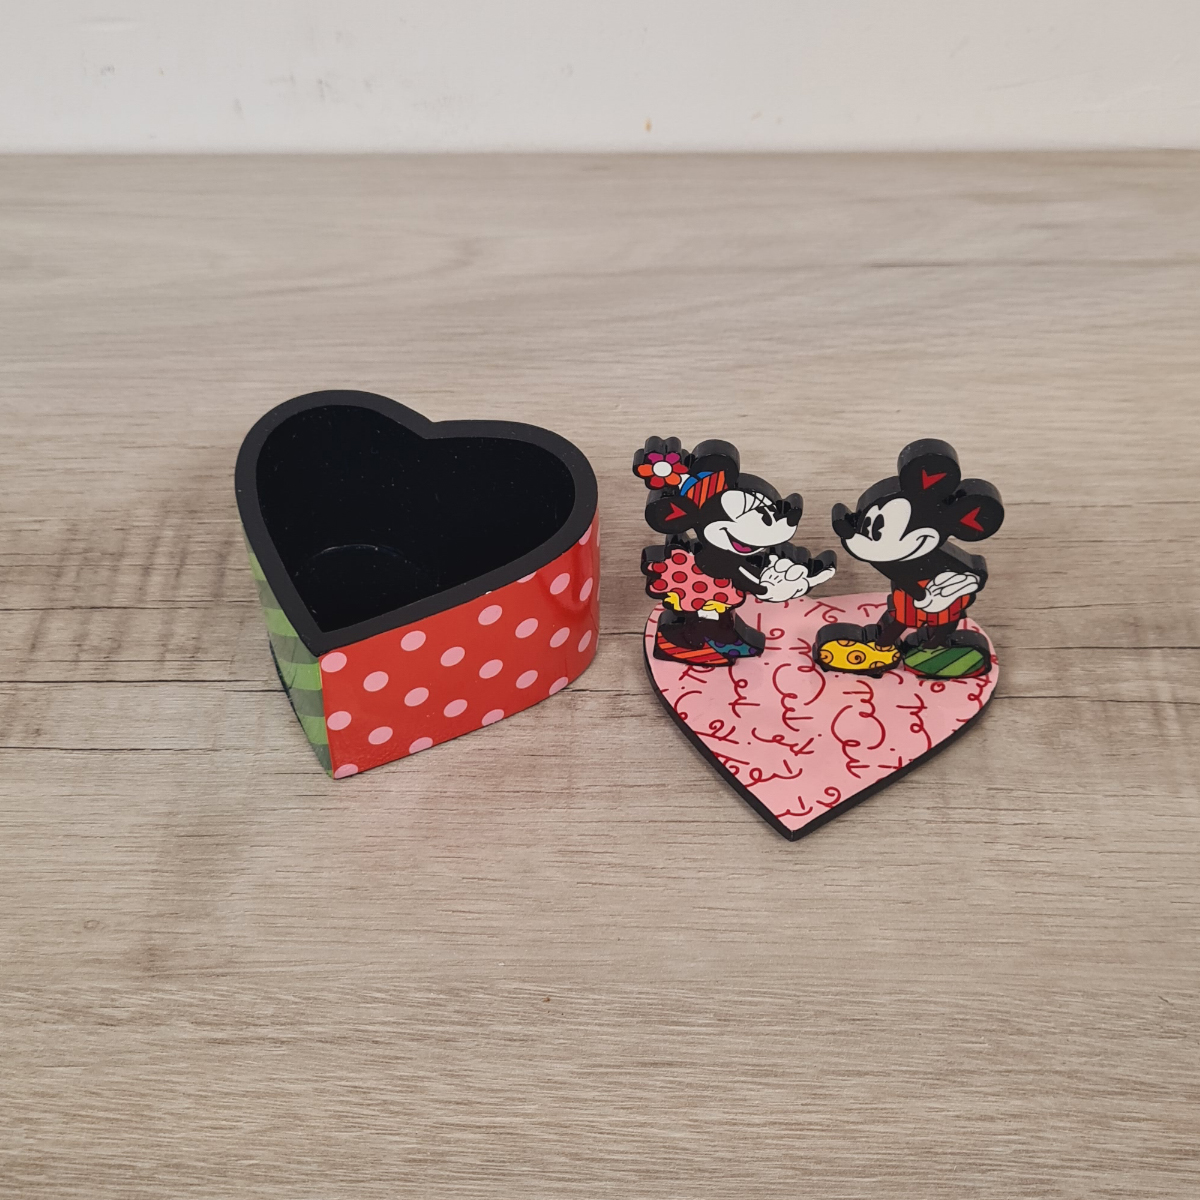 Mickey and Minnie box collection by Romano Britto